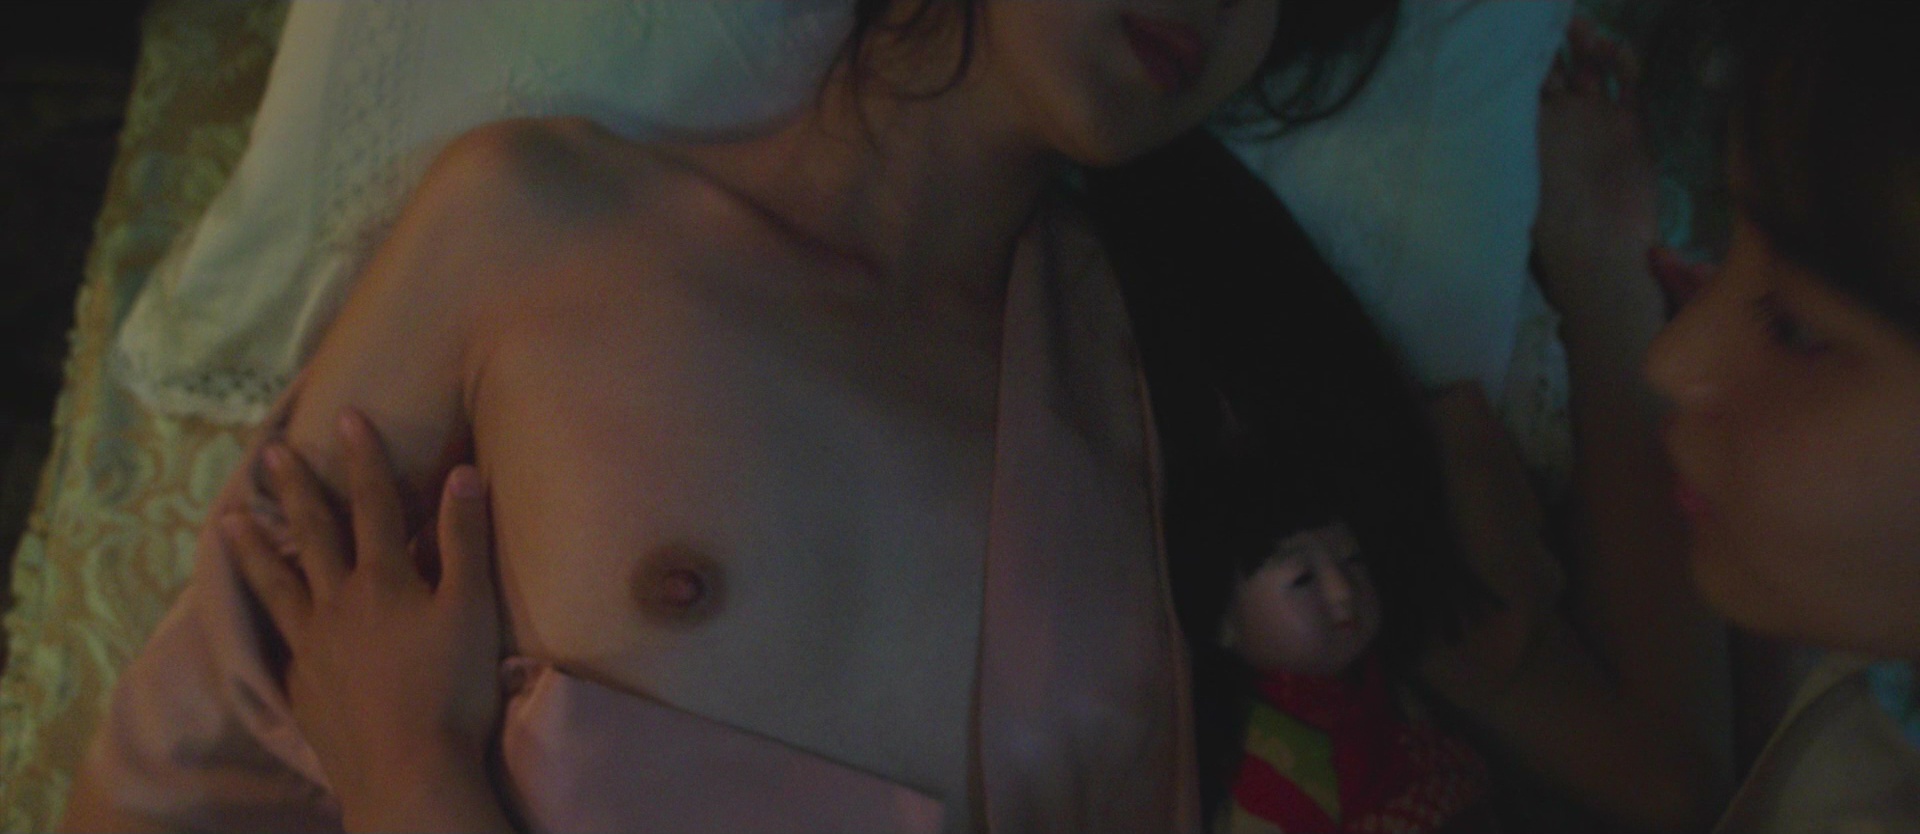 Ким Мин Хи nude pics.